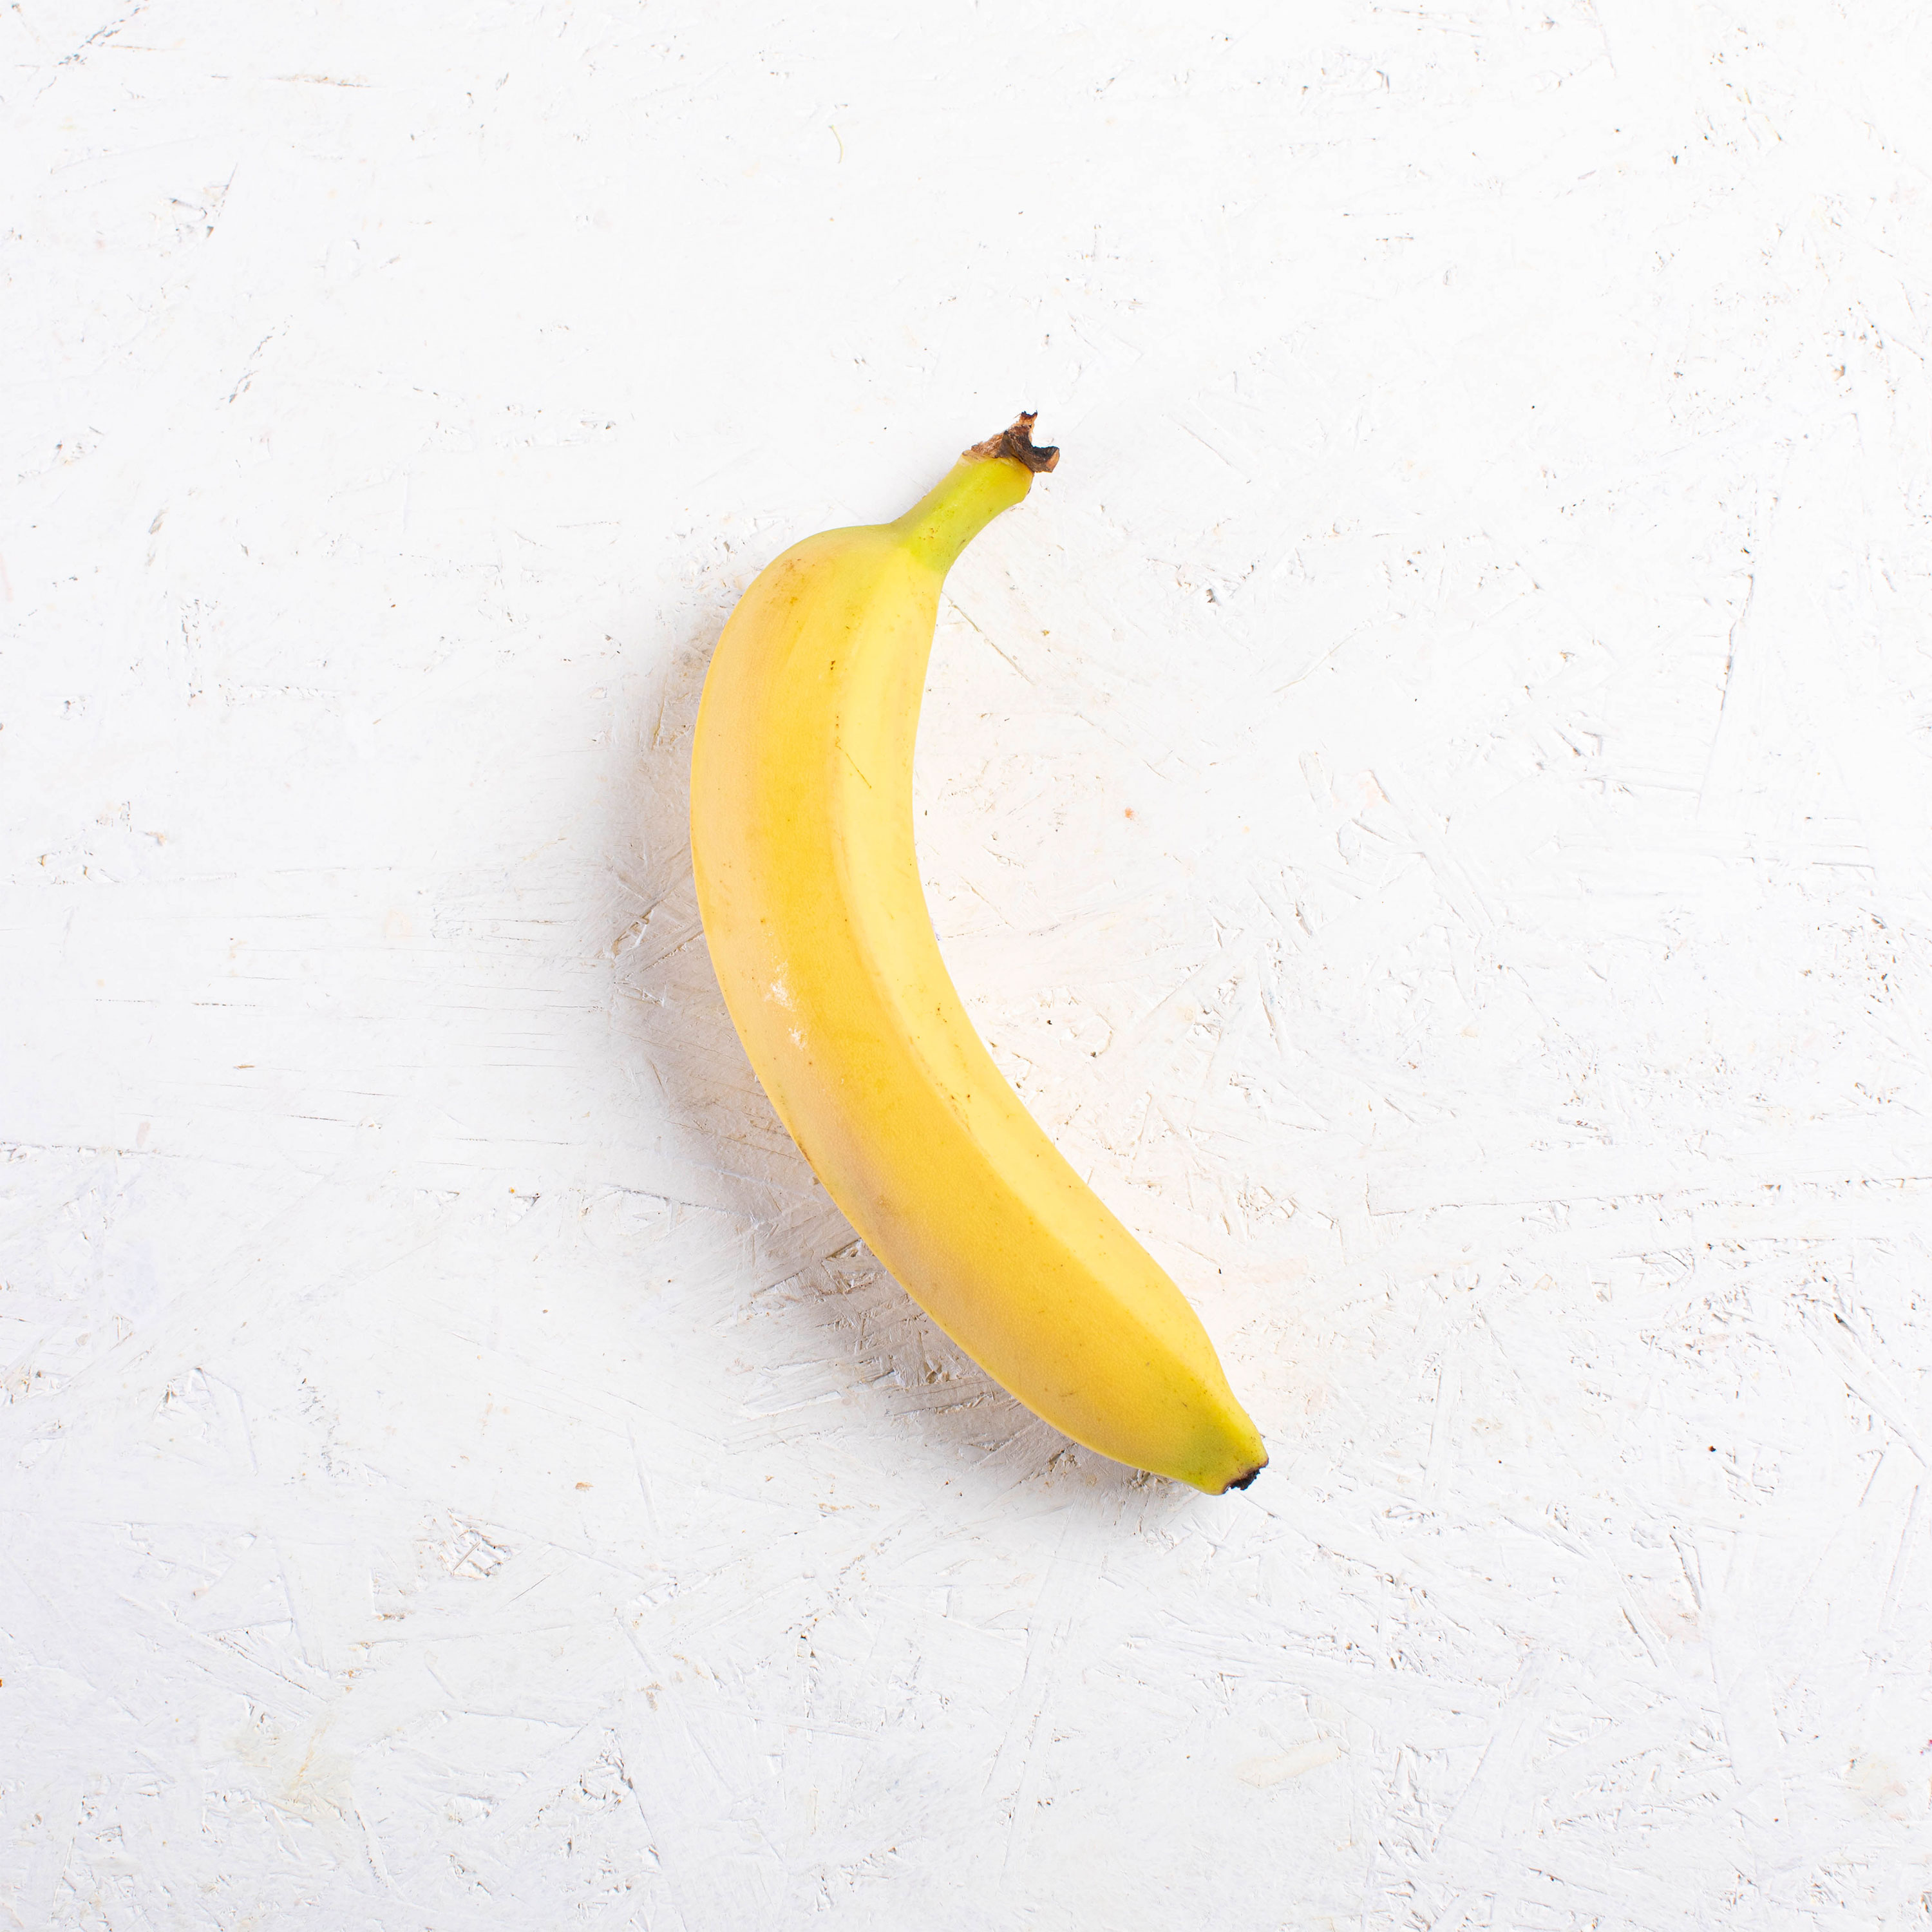 Банан (1 шт.)